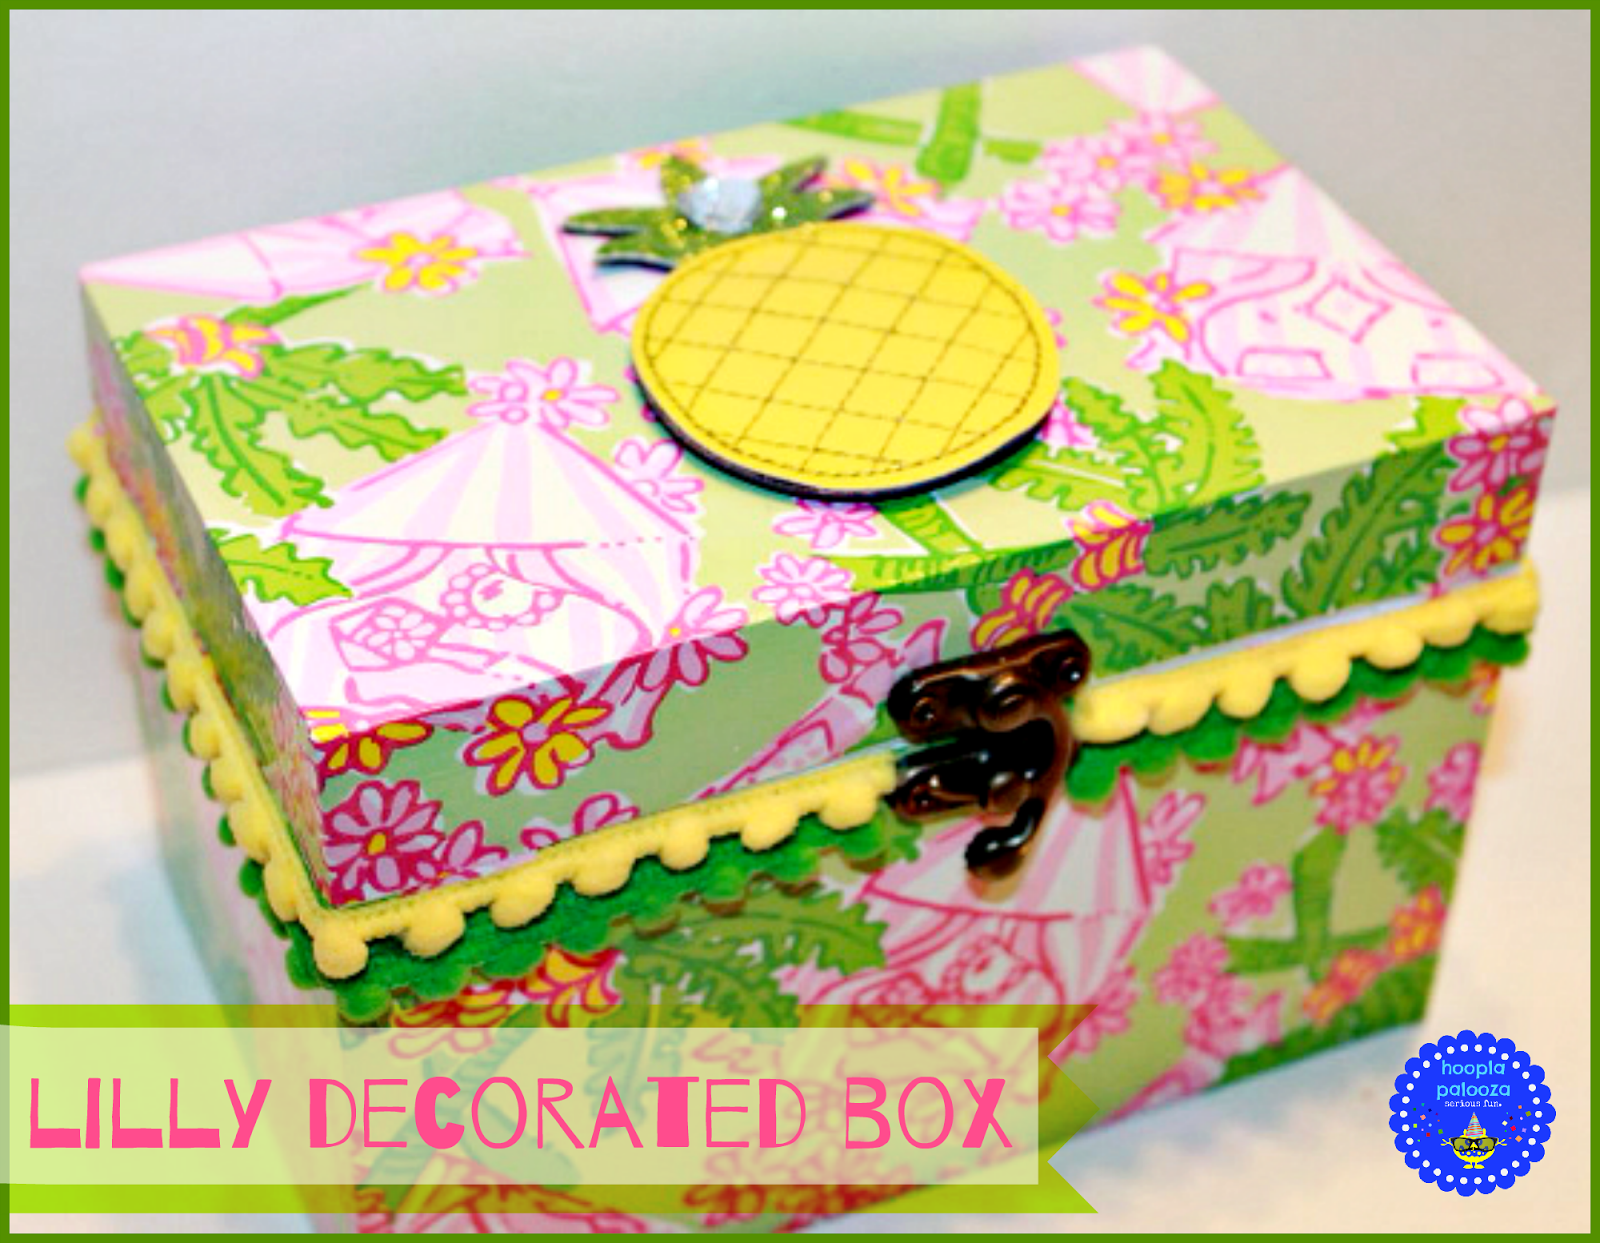 Decorated Boxes [Hoopla Palooza]